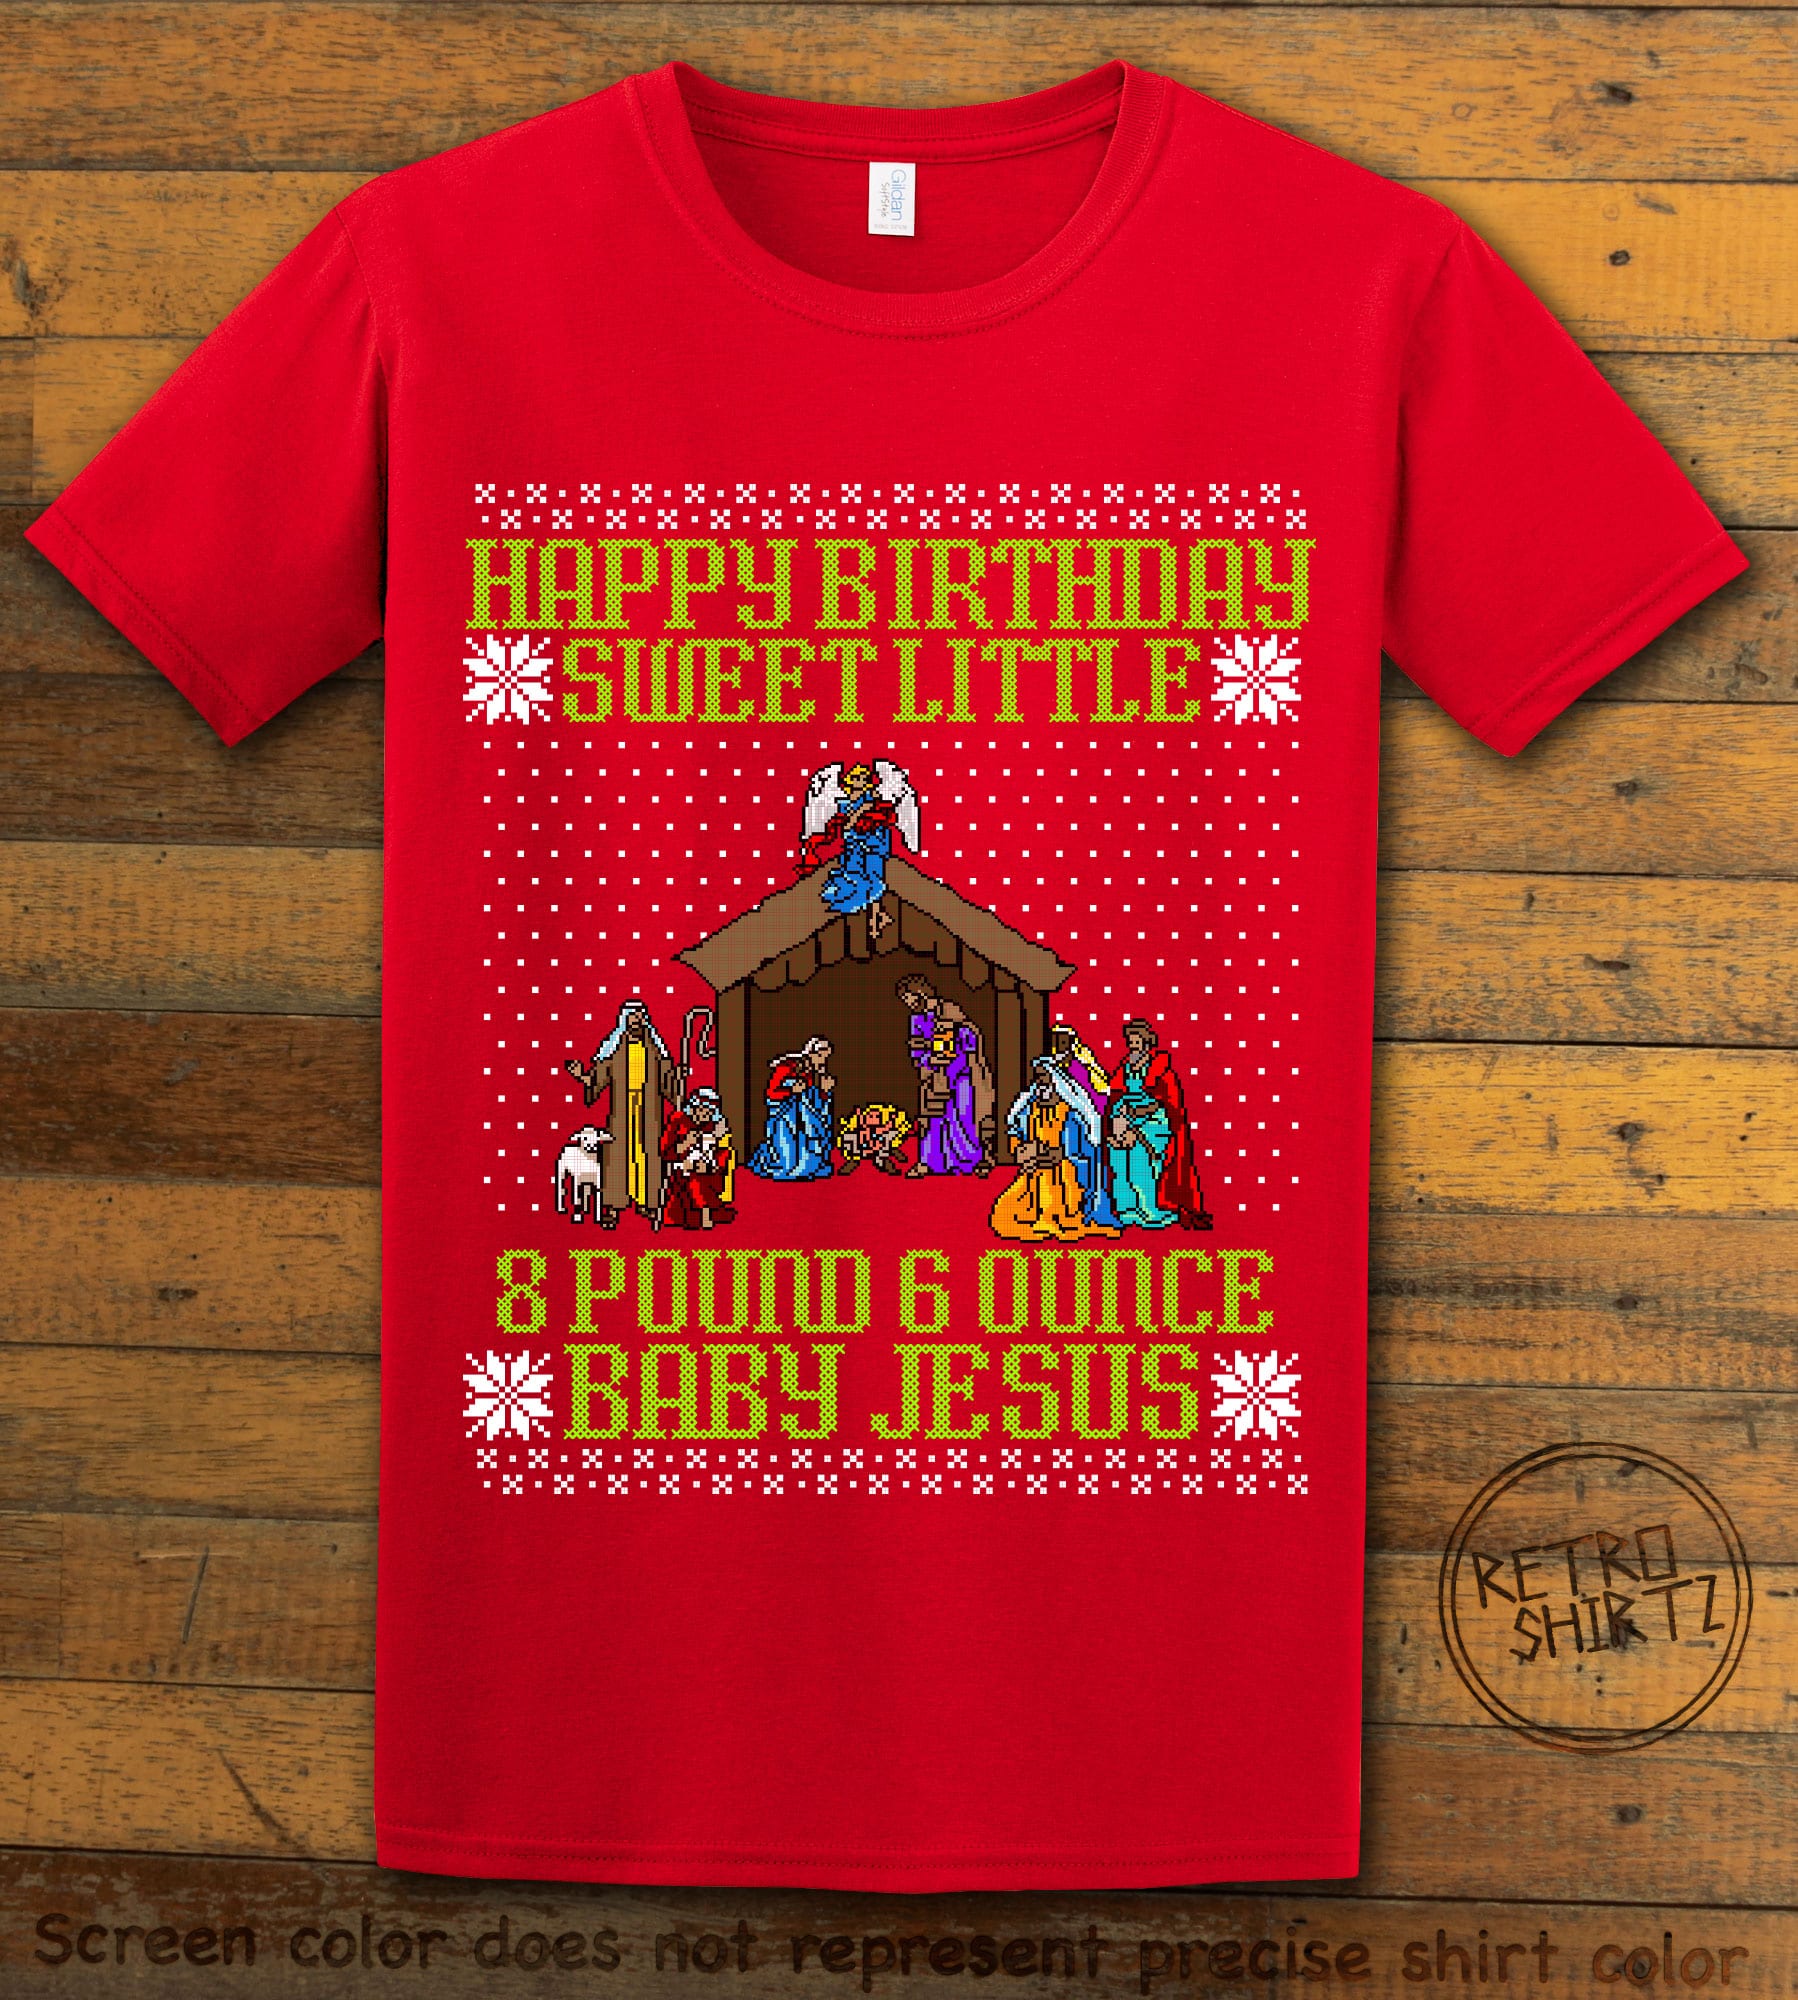 Happy Birthday Sweet Little Baby Jesus Christmas Graphic T-Shirt - red shirt design